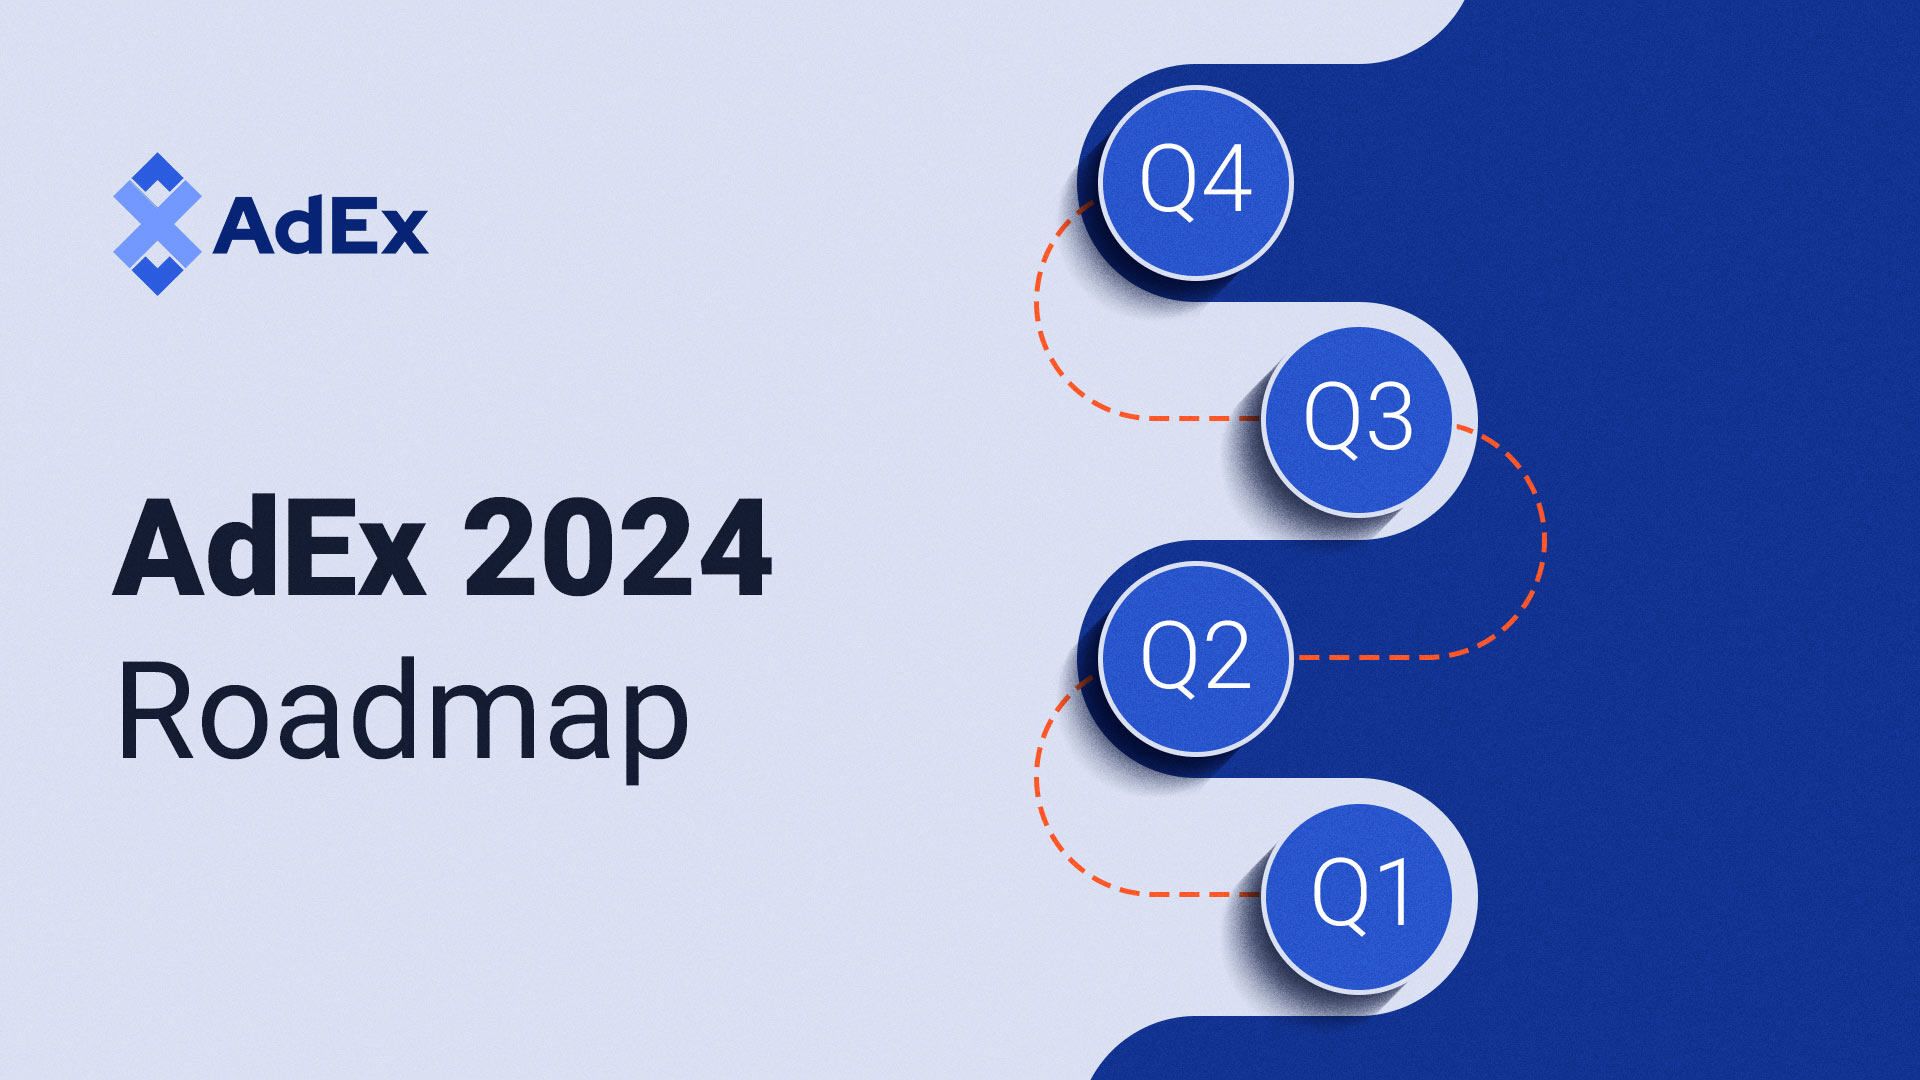 AdEx roadmap for 2024